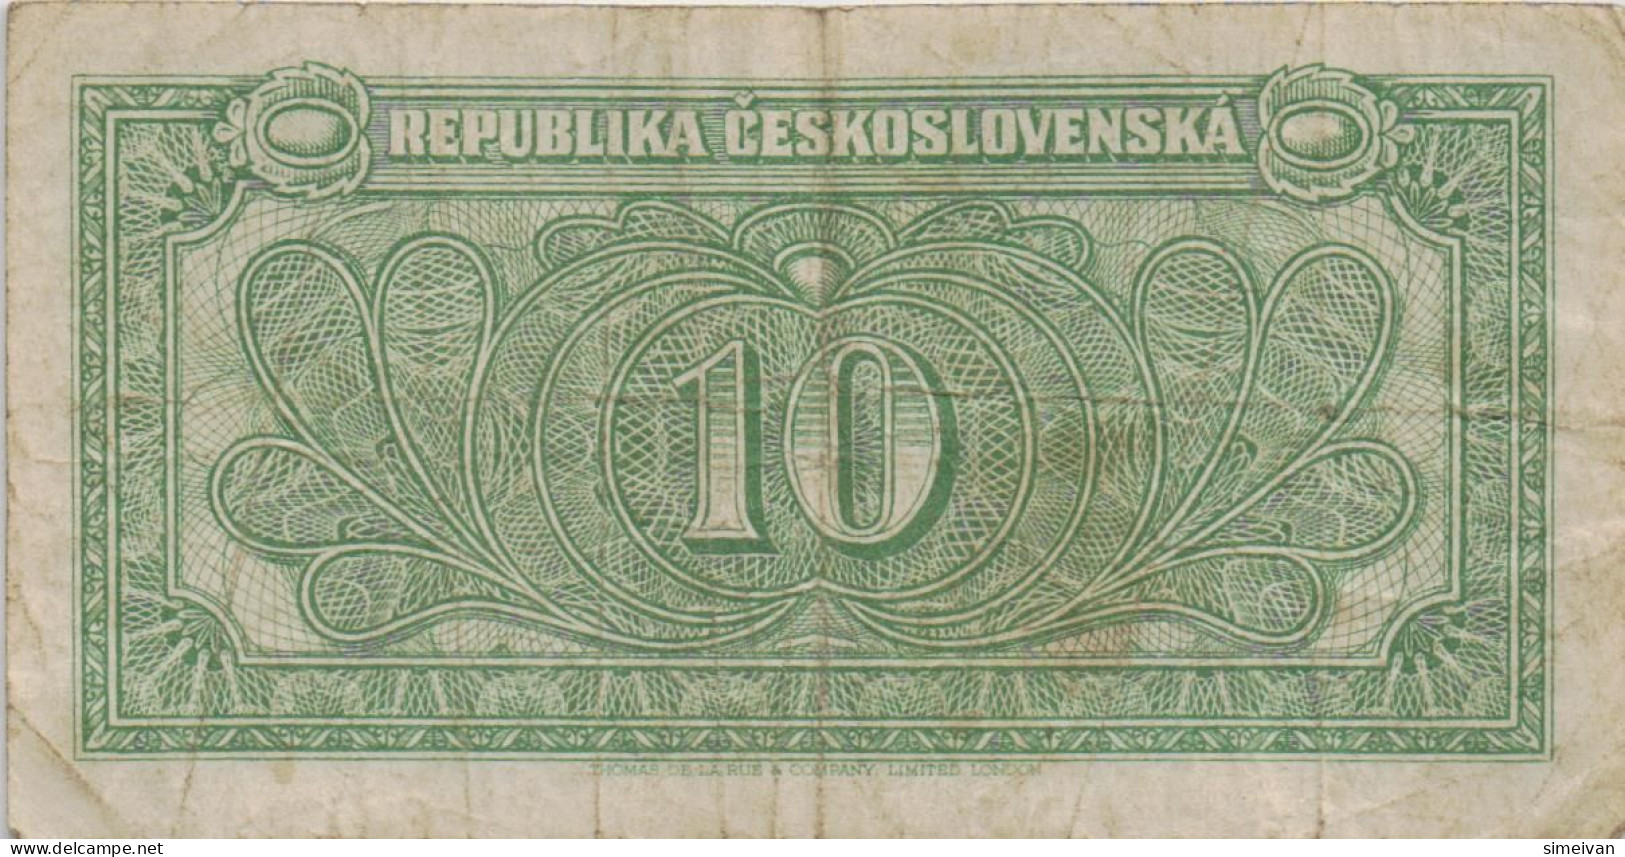 Czechoslovakia 10 Korun ND (1945) P-60a Banknote Europe Currency Tchécoslovaquie Tschechoslowakei #5226 - Tschechoslowakei